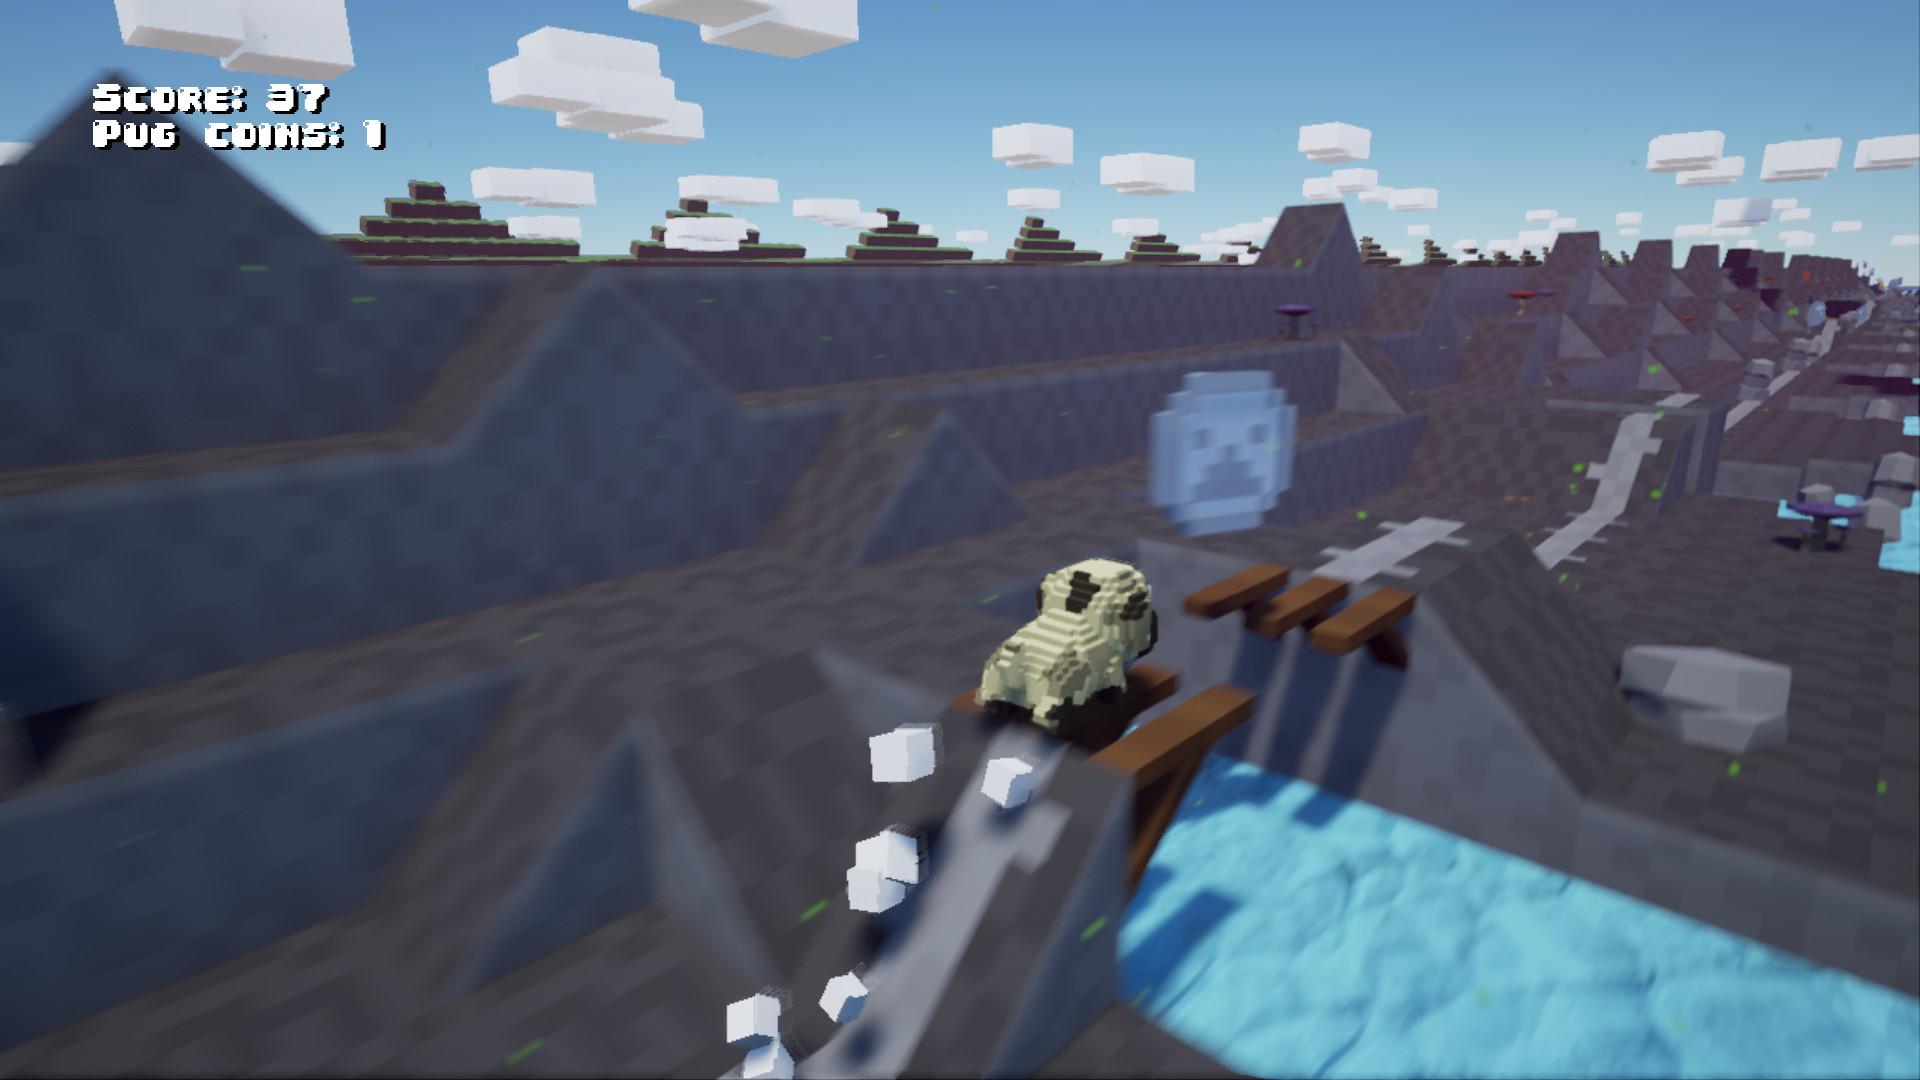 Screenshot №3 from game Turbo Pug 3D